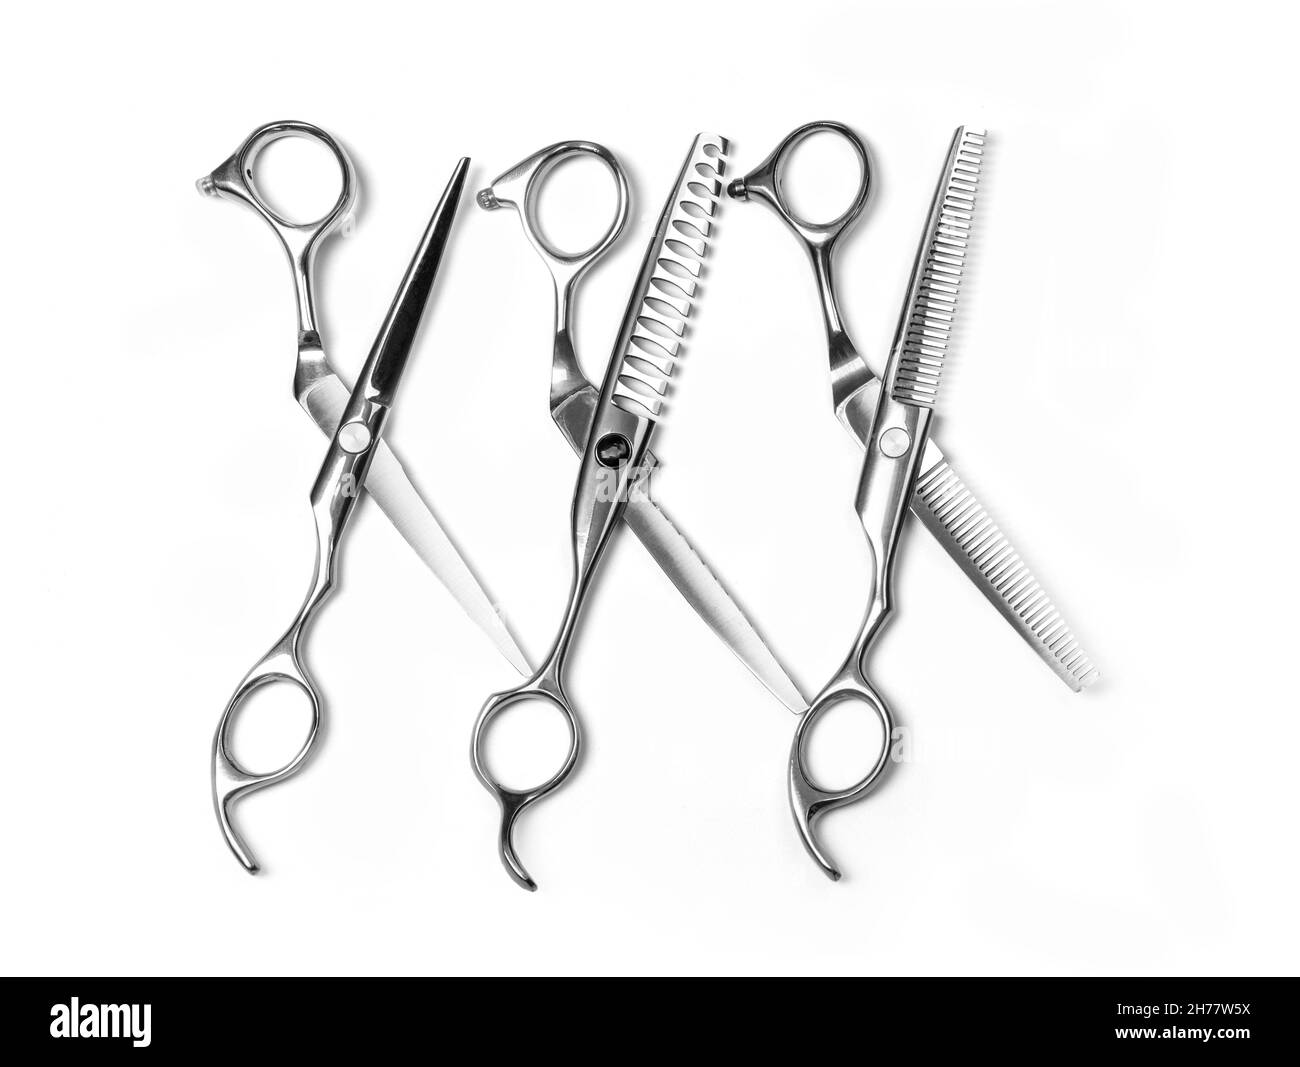 Professional Haircutting Scissors. Studio isolation. Stock Photo